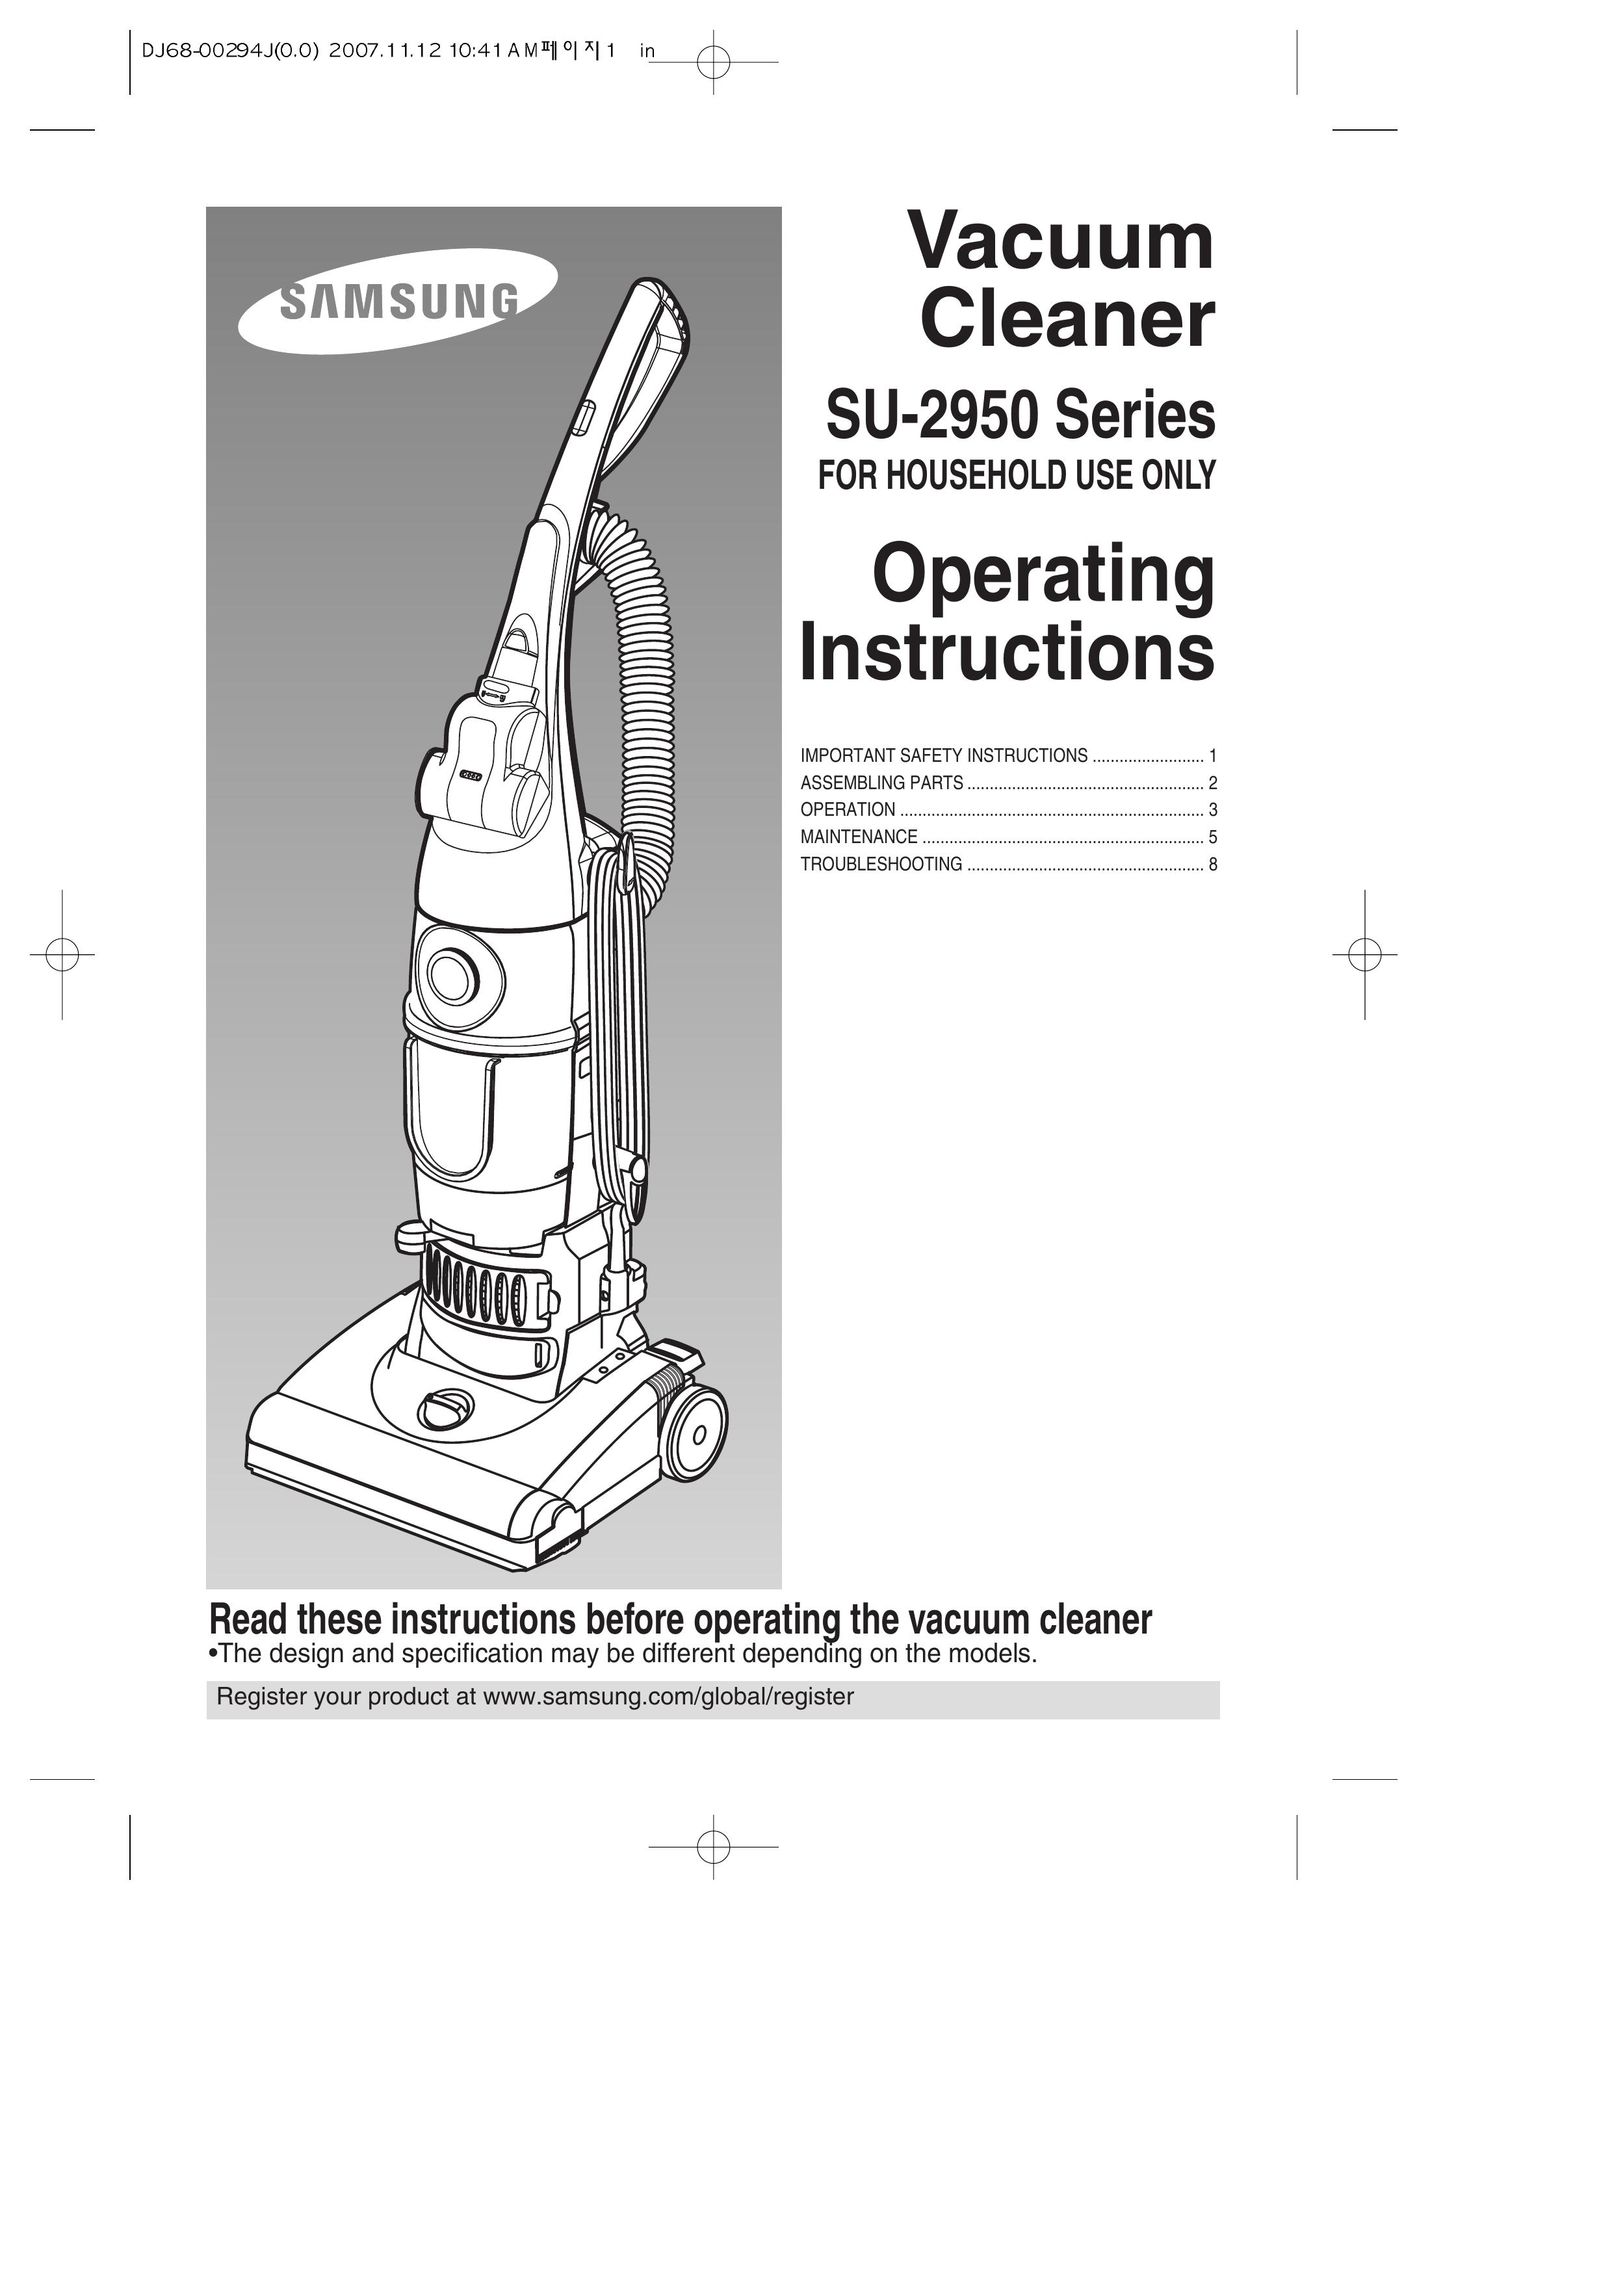 Samsung SU-2950 Series Vacuum Cleaner User Manual